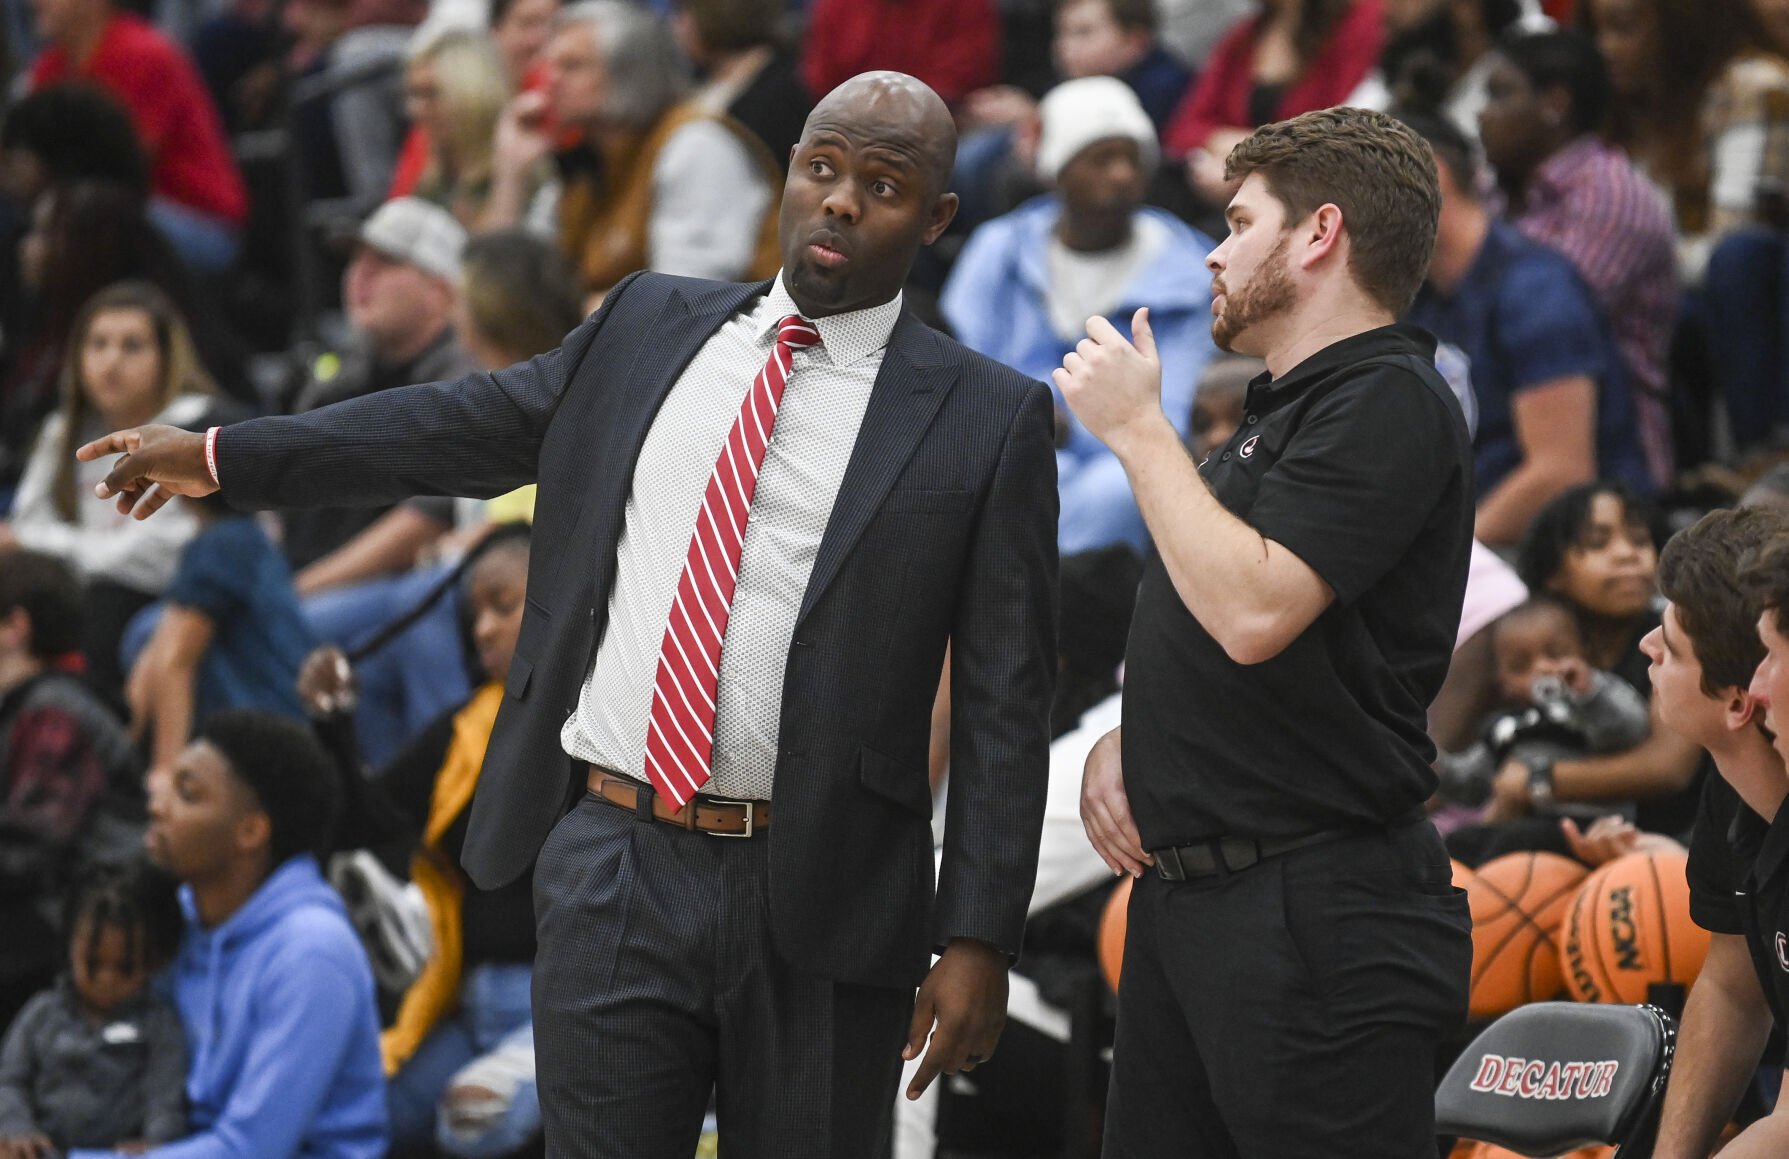 Kori Walker Named Athens Basketball Coach – Former Decatur Coach Brings Fresh Leadership